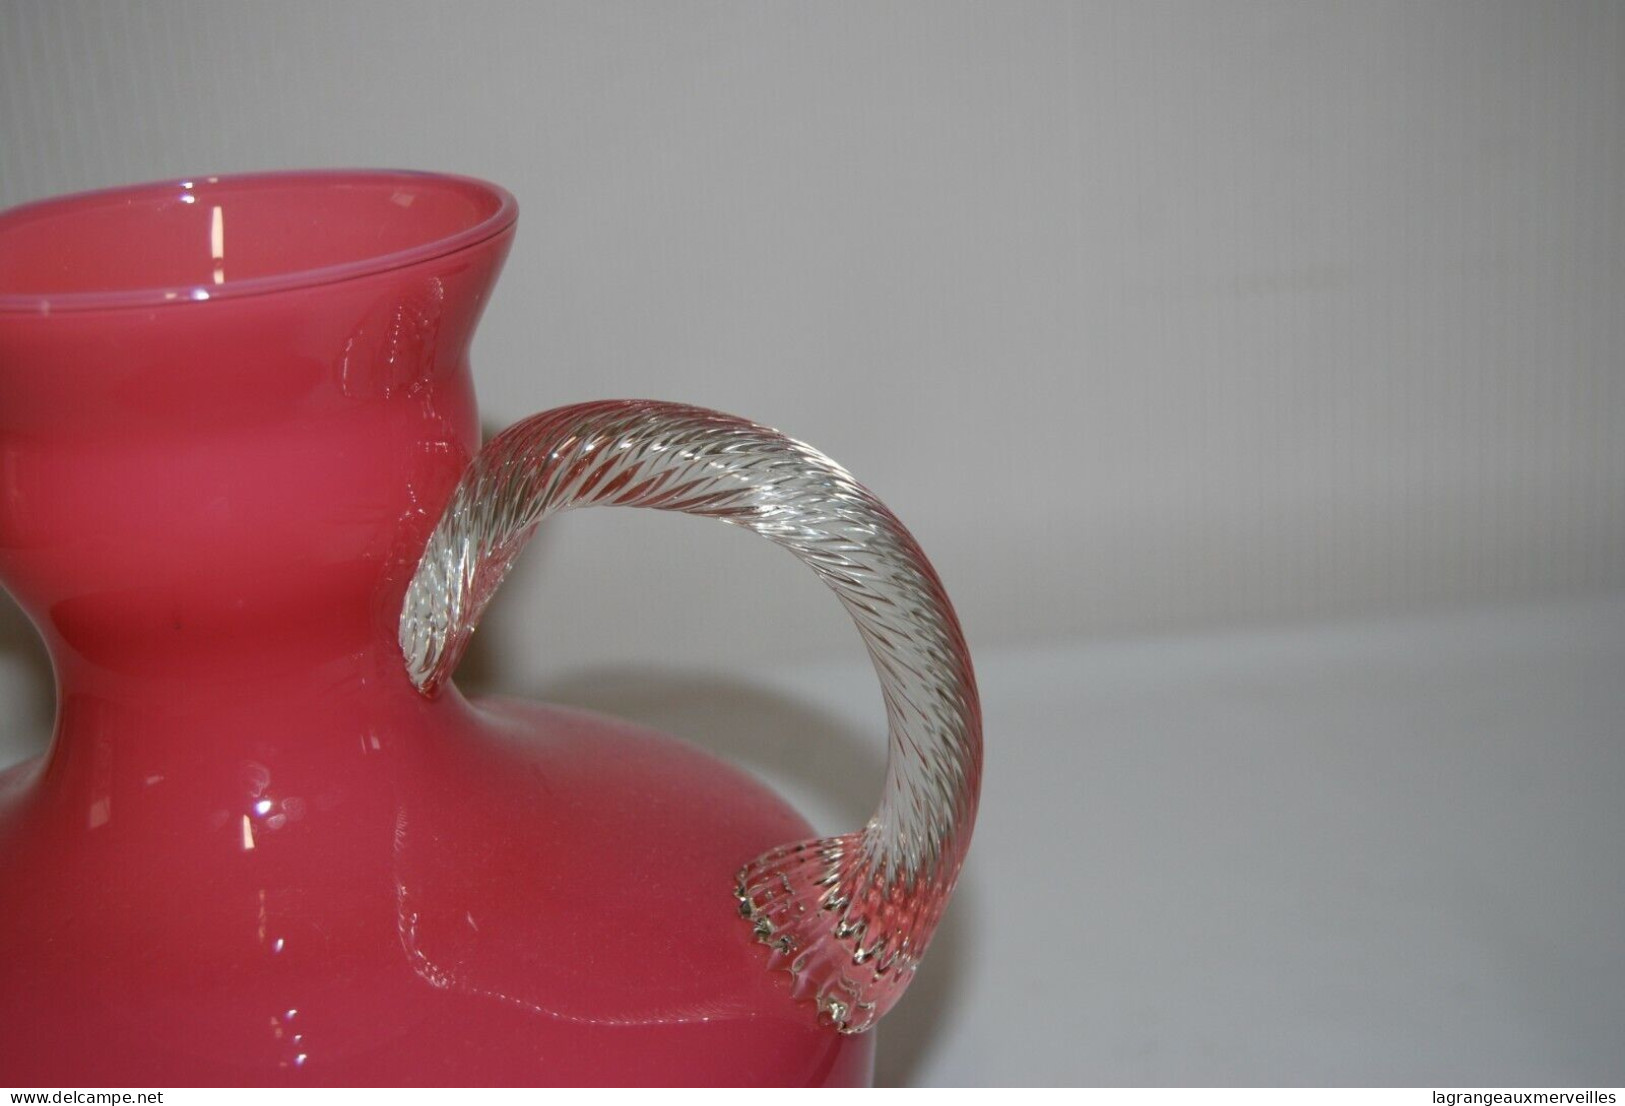 E1 Ancien Vase - Vitrine - Vase Rose - Décoration - Vasi